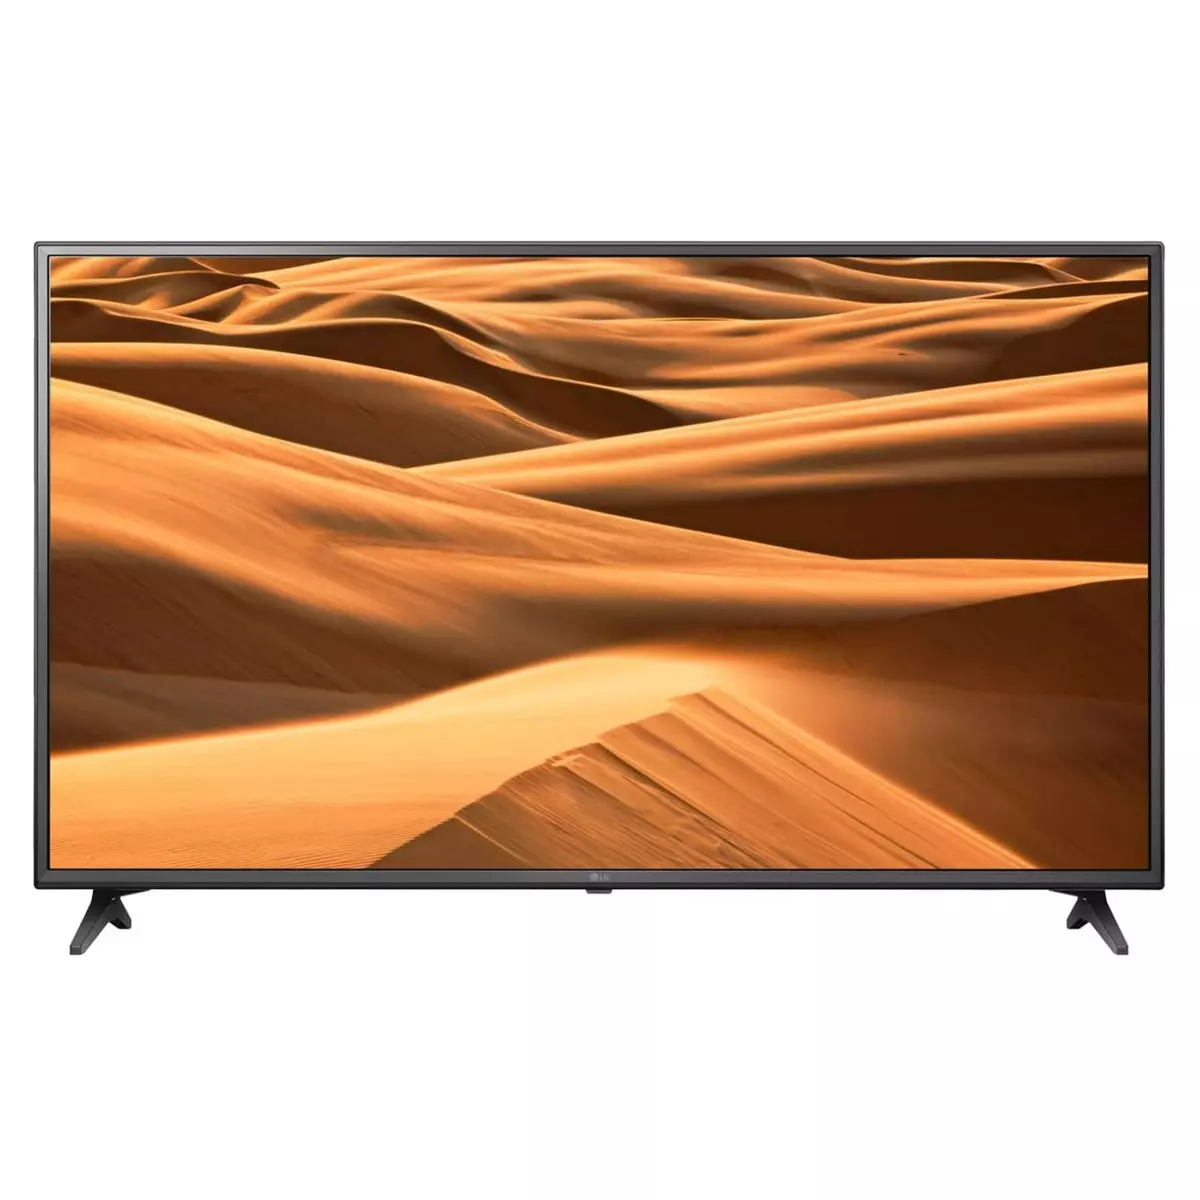 LG 65UM7050 TV LED 4K UHD 164 cm Smart TV